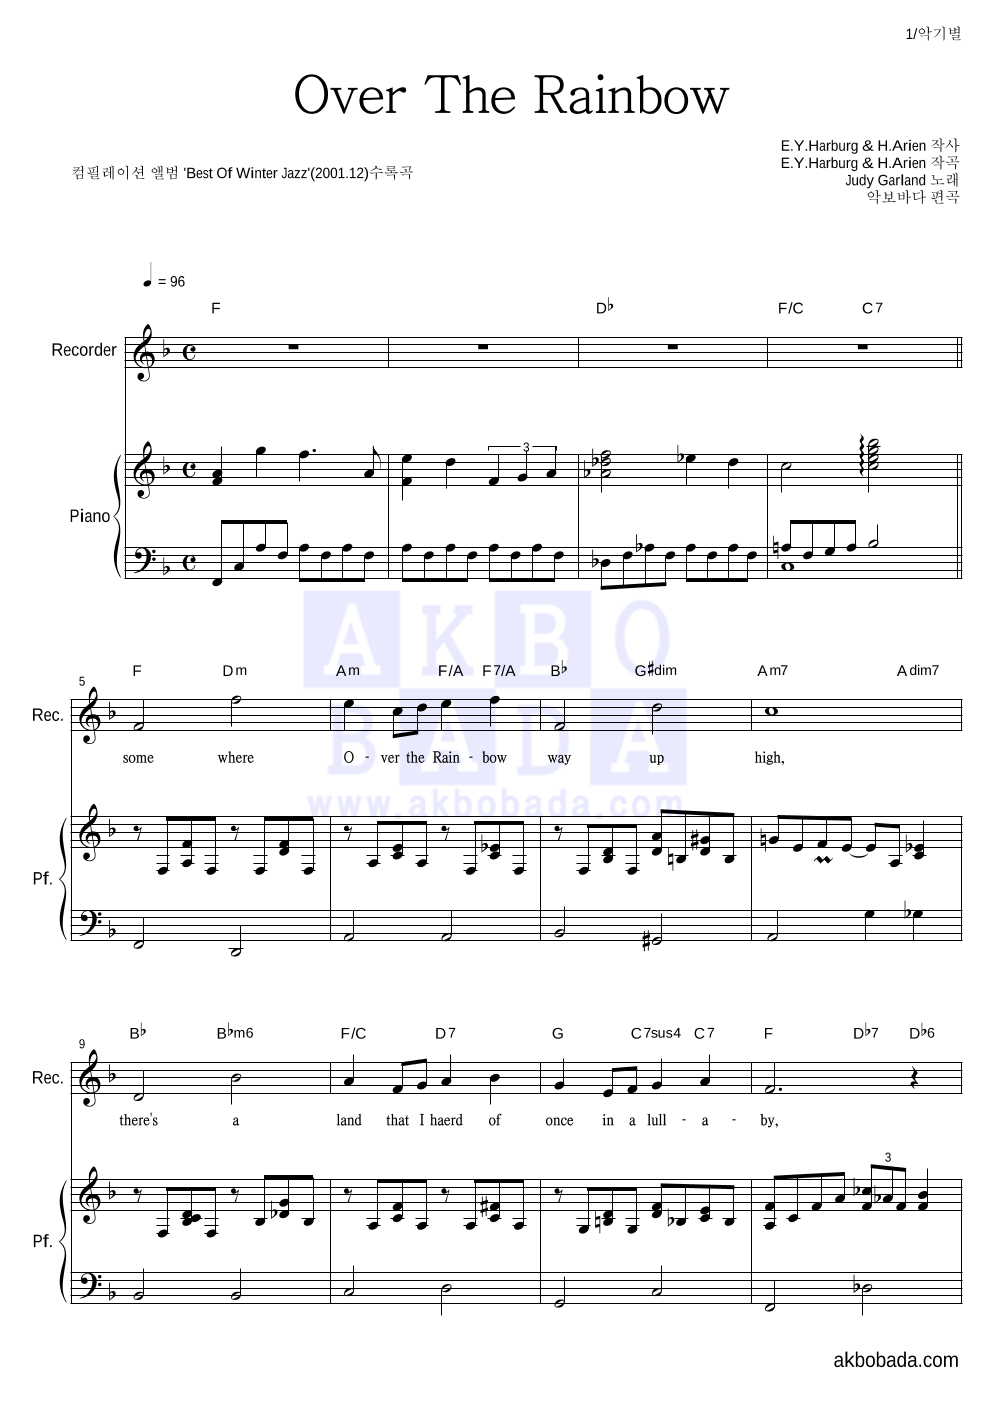 Judy Garland - Over The Rainbow (Best Of Winter Jazz Ver.) 리코더&피아노 악보 